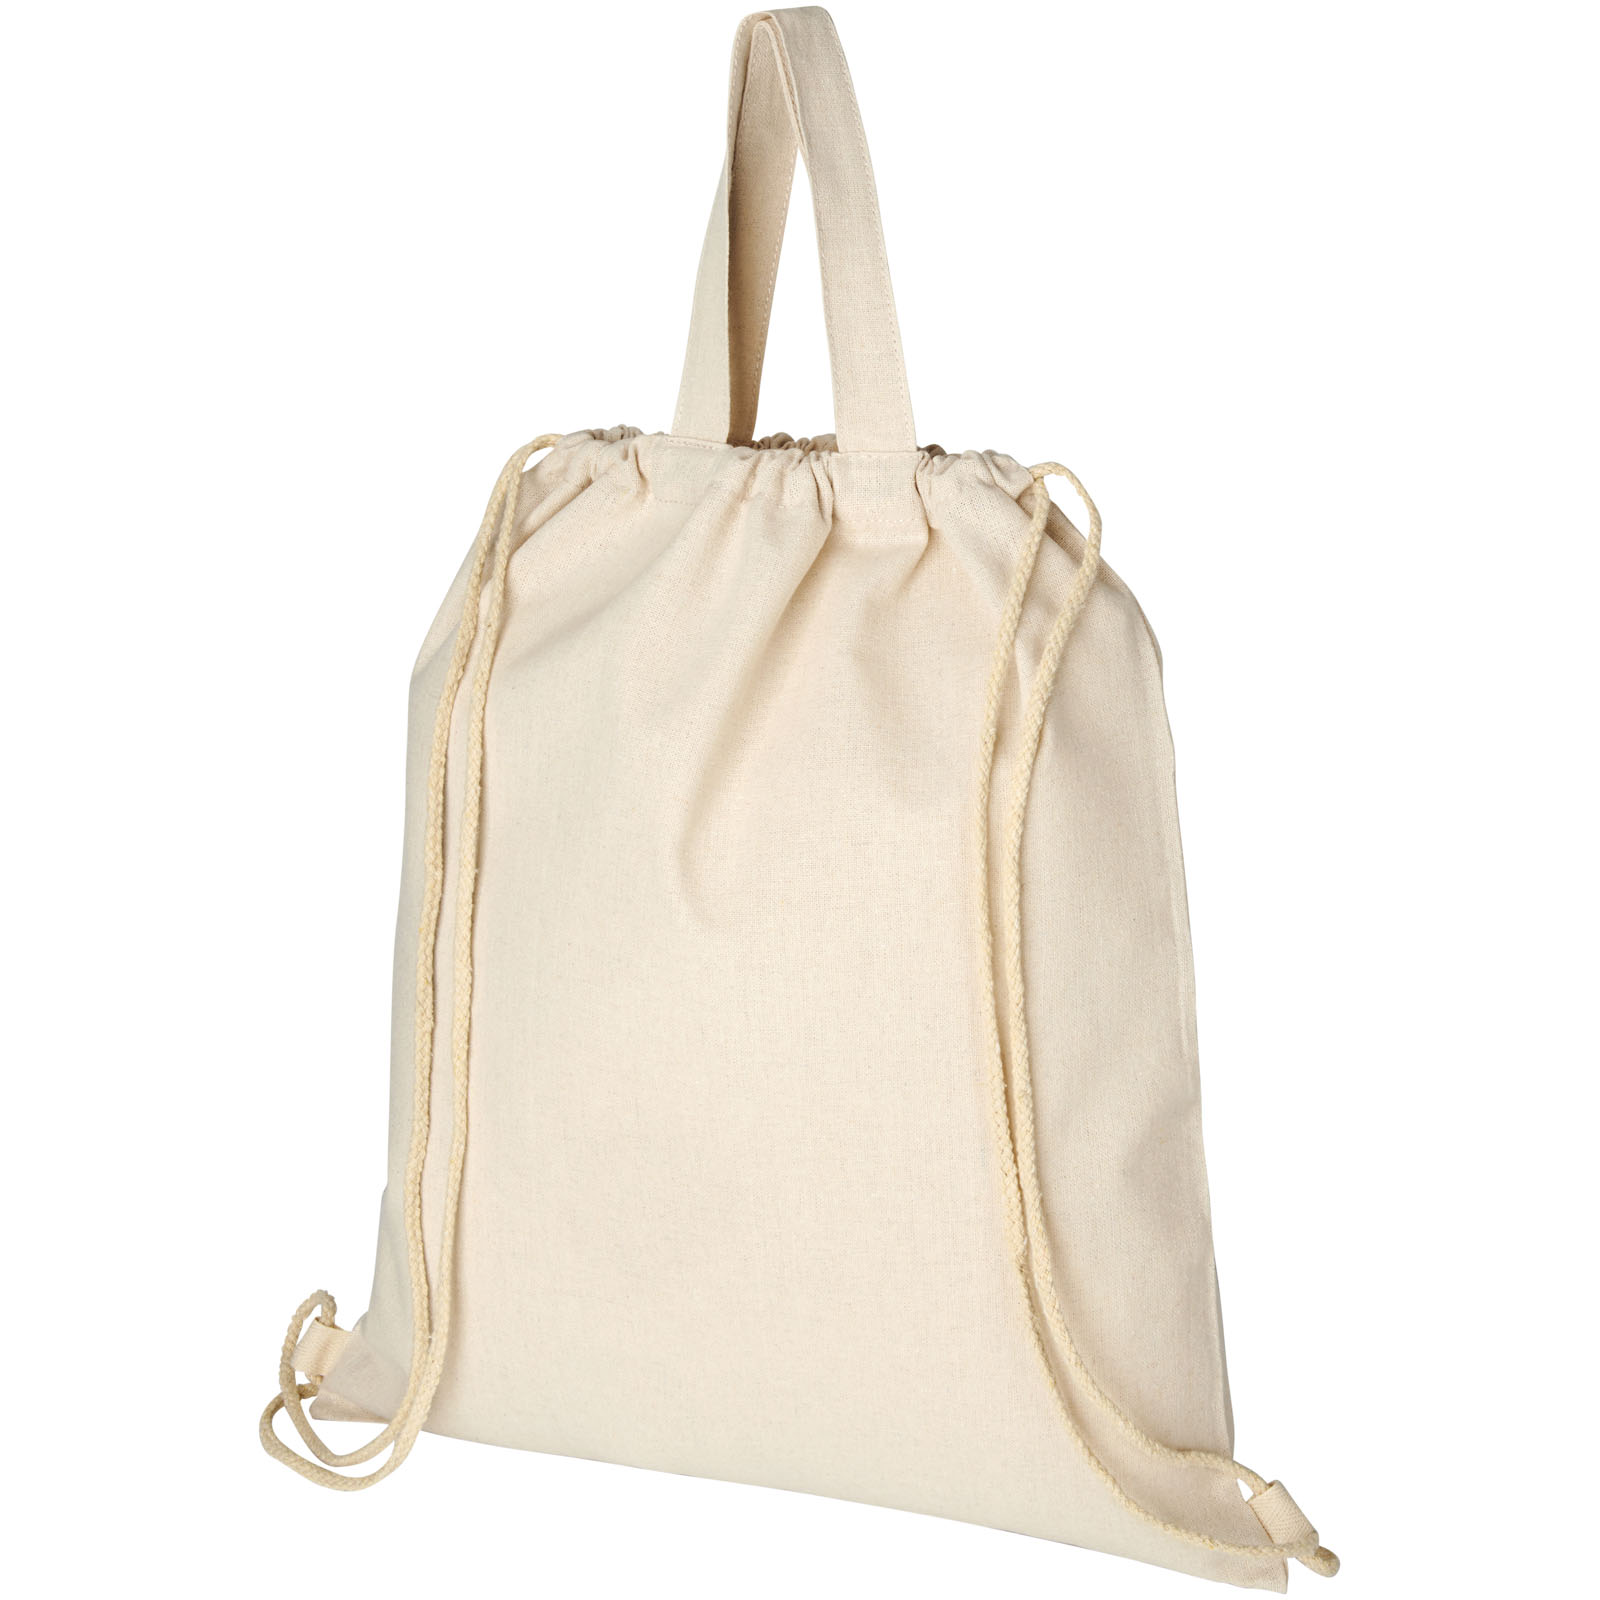 Advertising Drawstring Bags - Pheebs 210 g/m² recycled drawstring bag 6L - 2